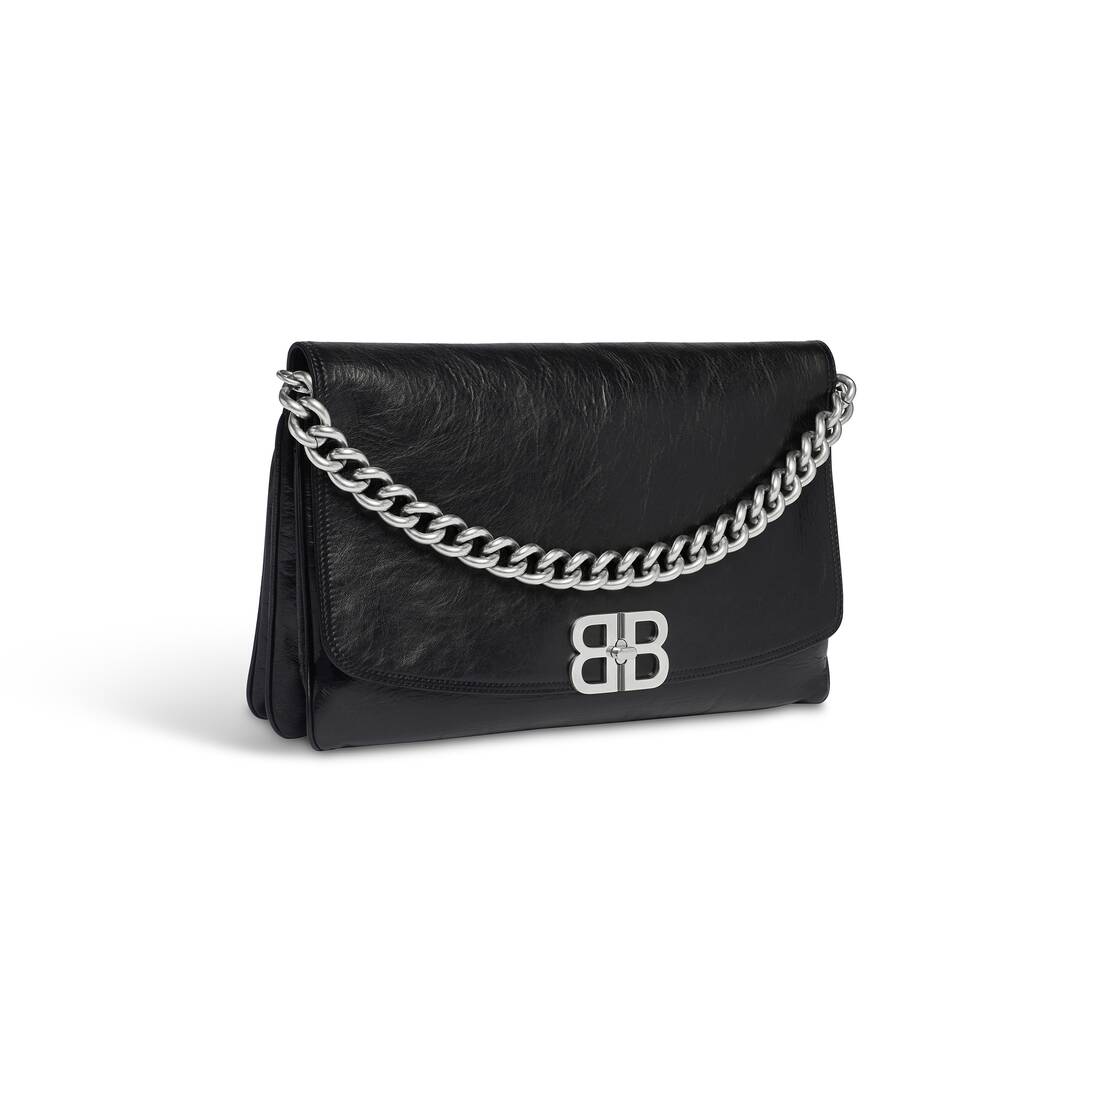 Trust us The Balenciaga B Bag is destined to cult status